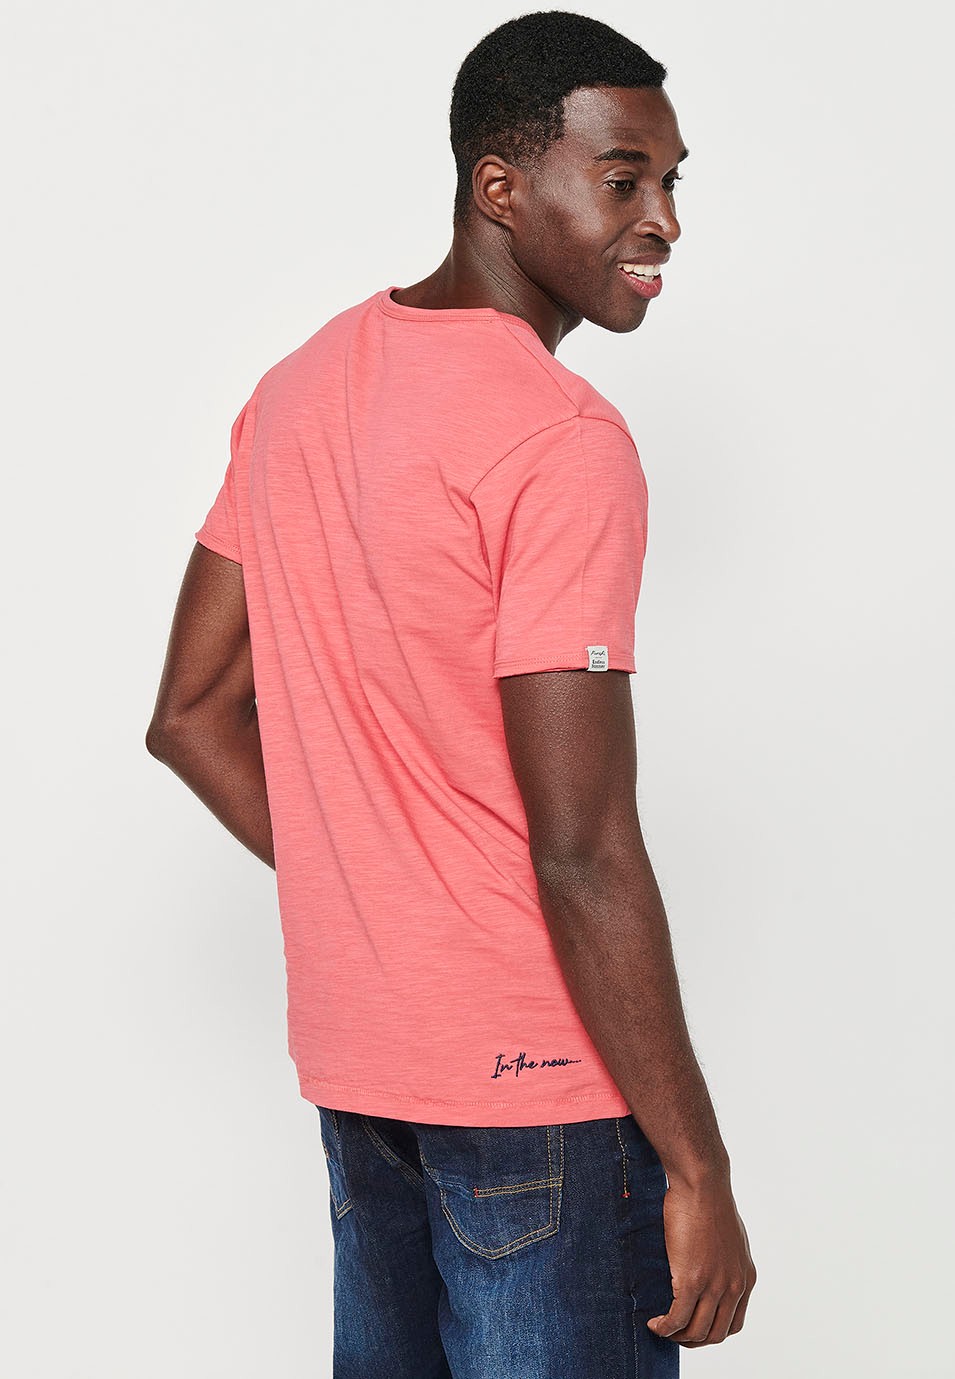 Camiseta básica de manga corta de algodón, cuello V con boton, color rosa para hombre 1